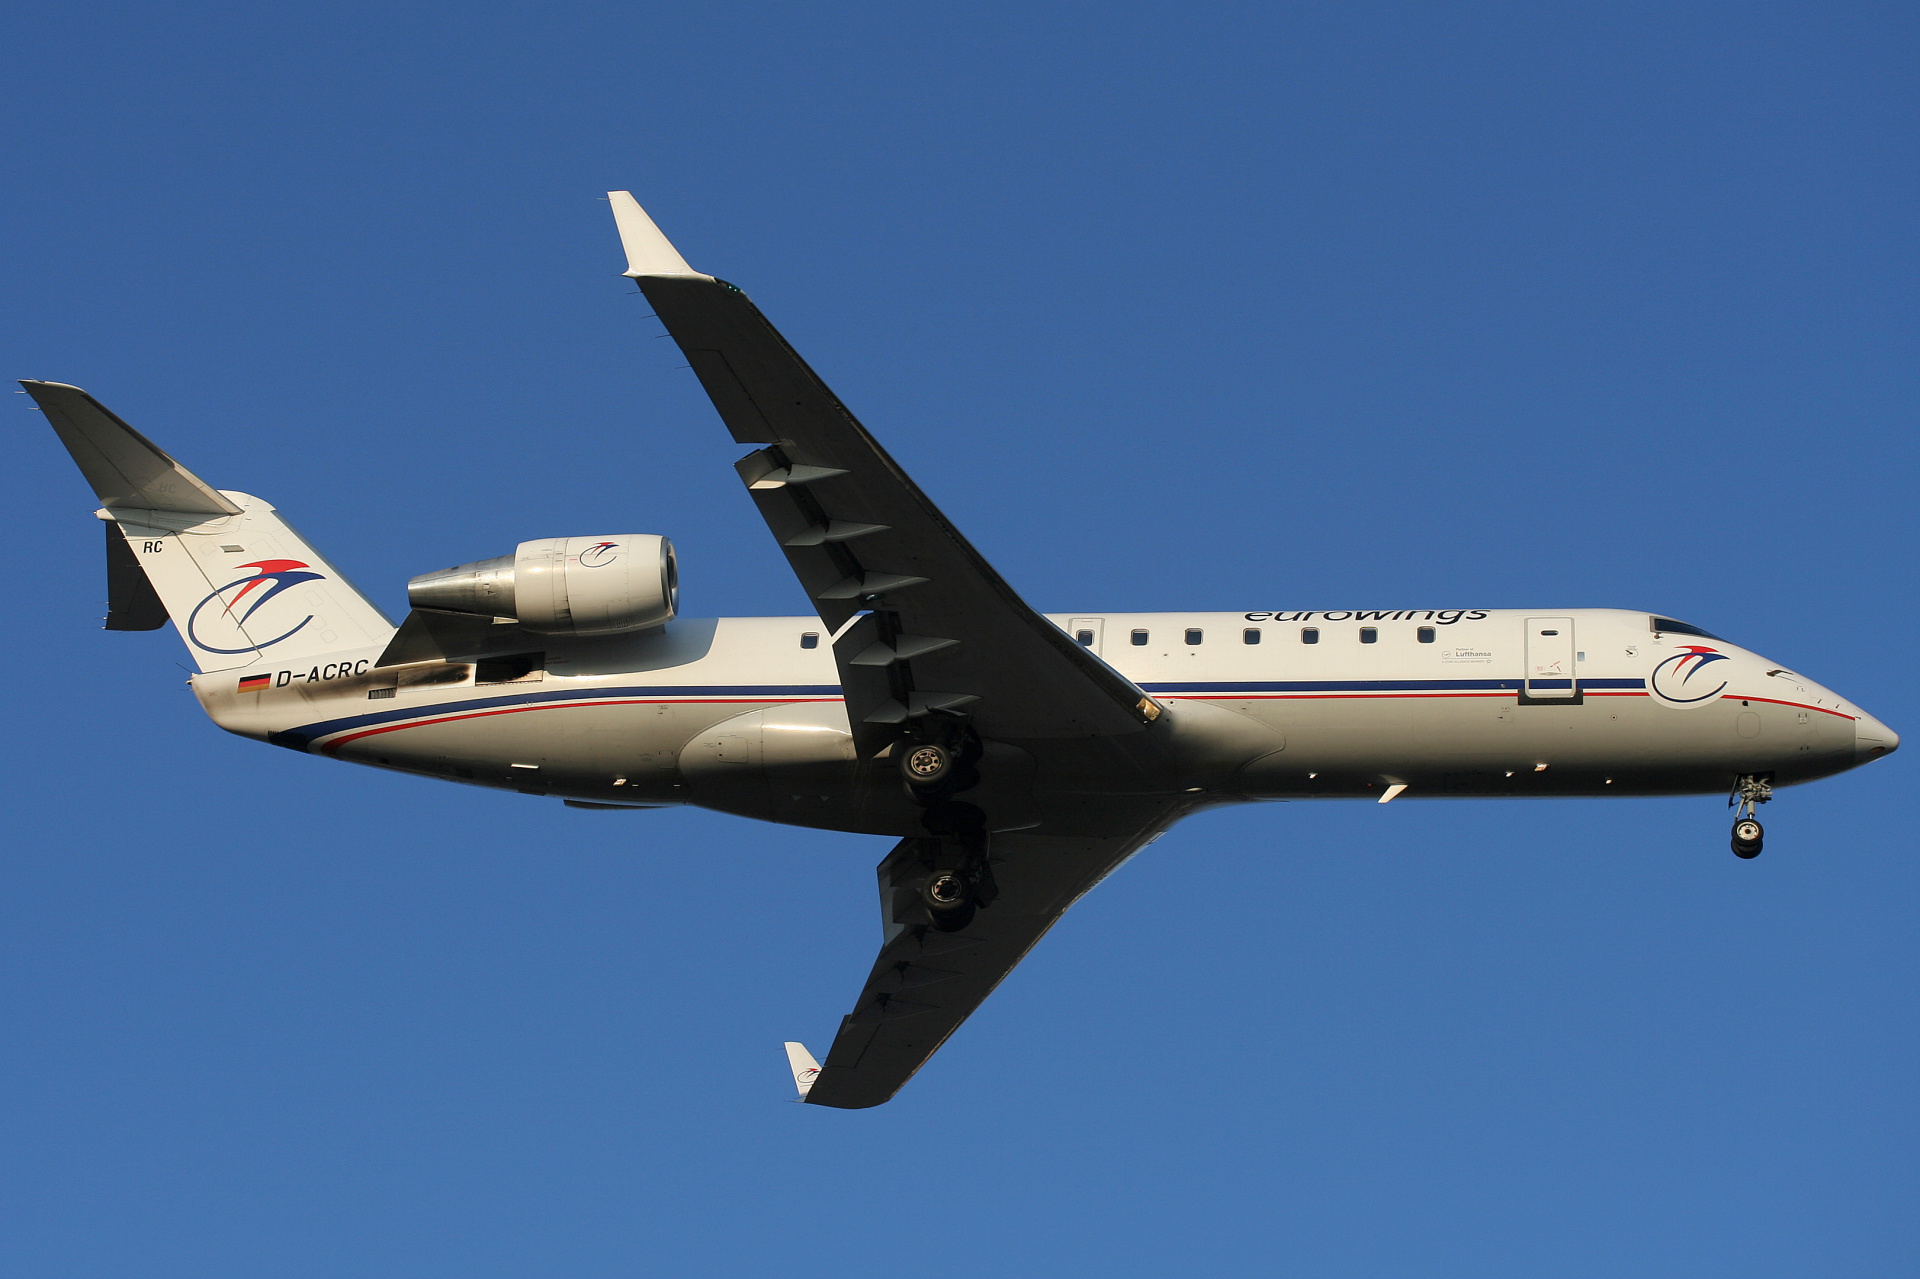 D-ACRC, Eurowings (Aircraft » EPWA Spotting » Bombardier CL-600 Regional Jet » CRJ-200)